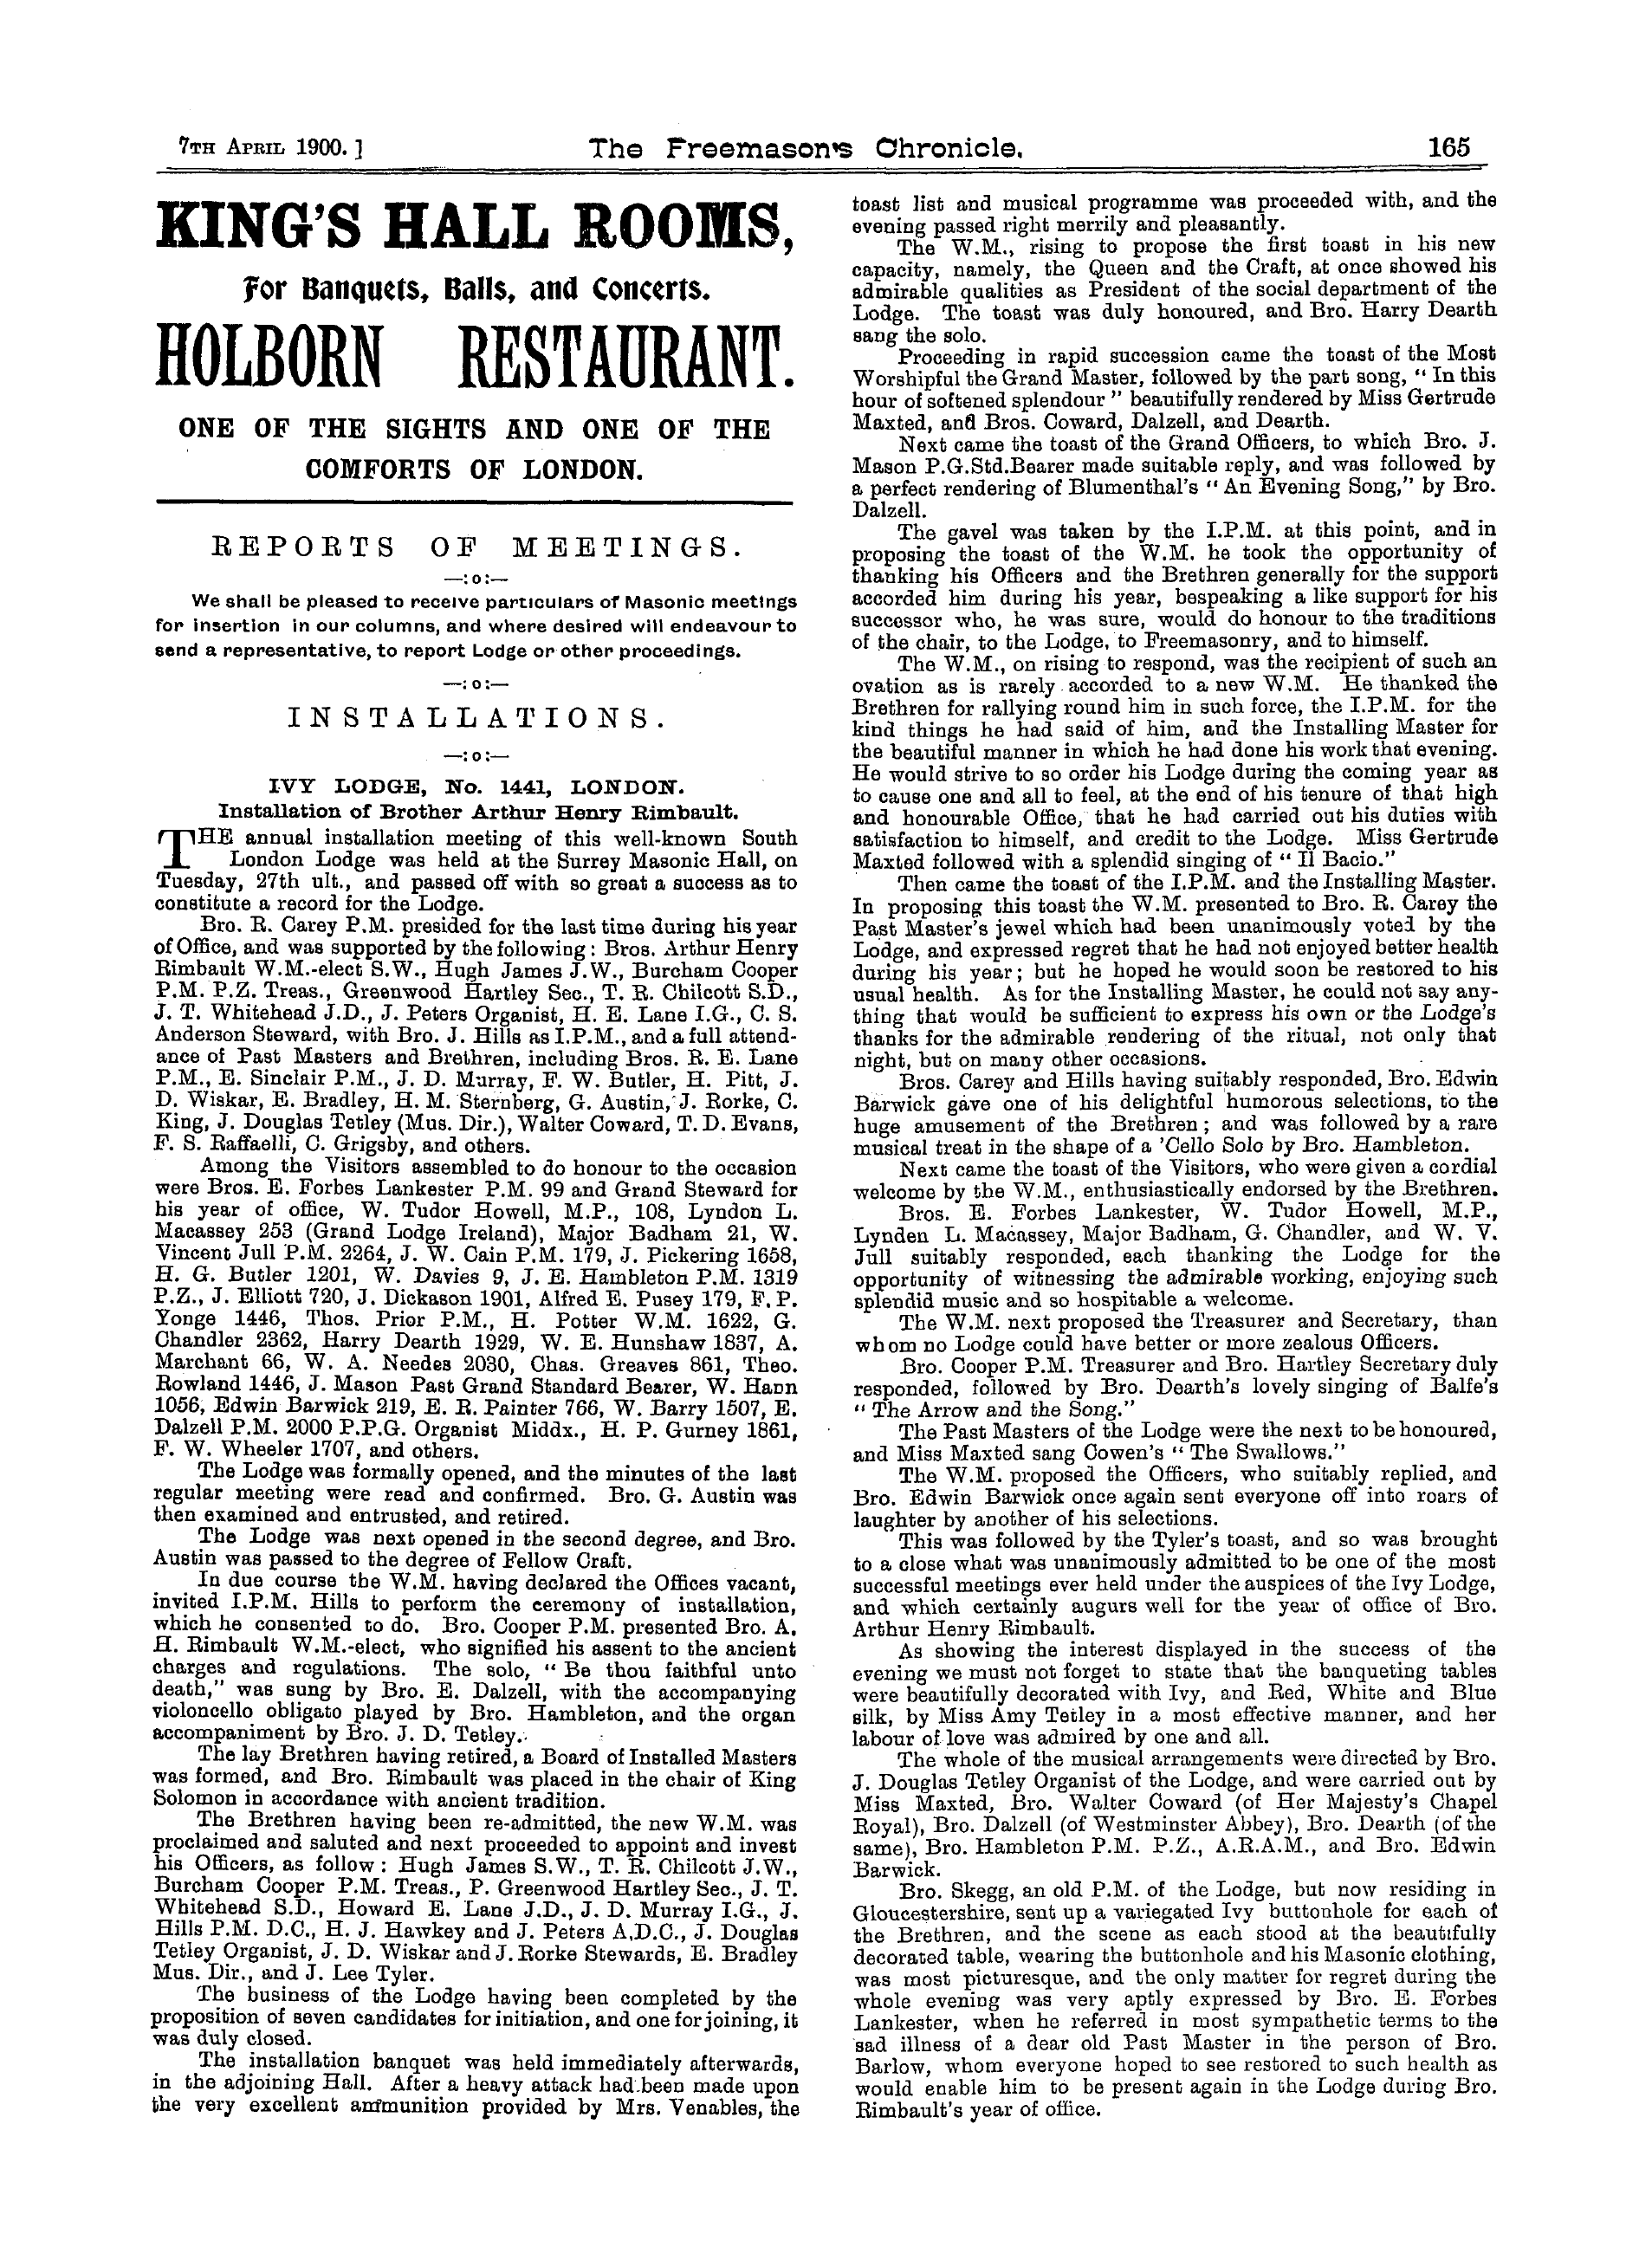 The Freemason's Chronicle: 1900-04-07 - Ad00902